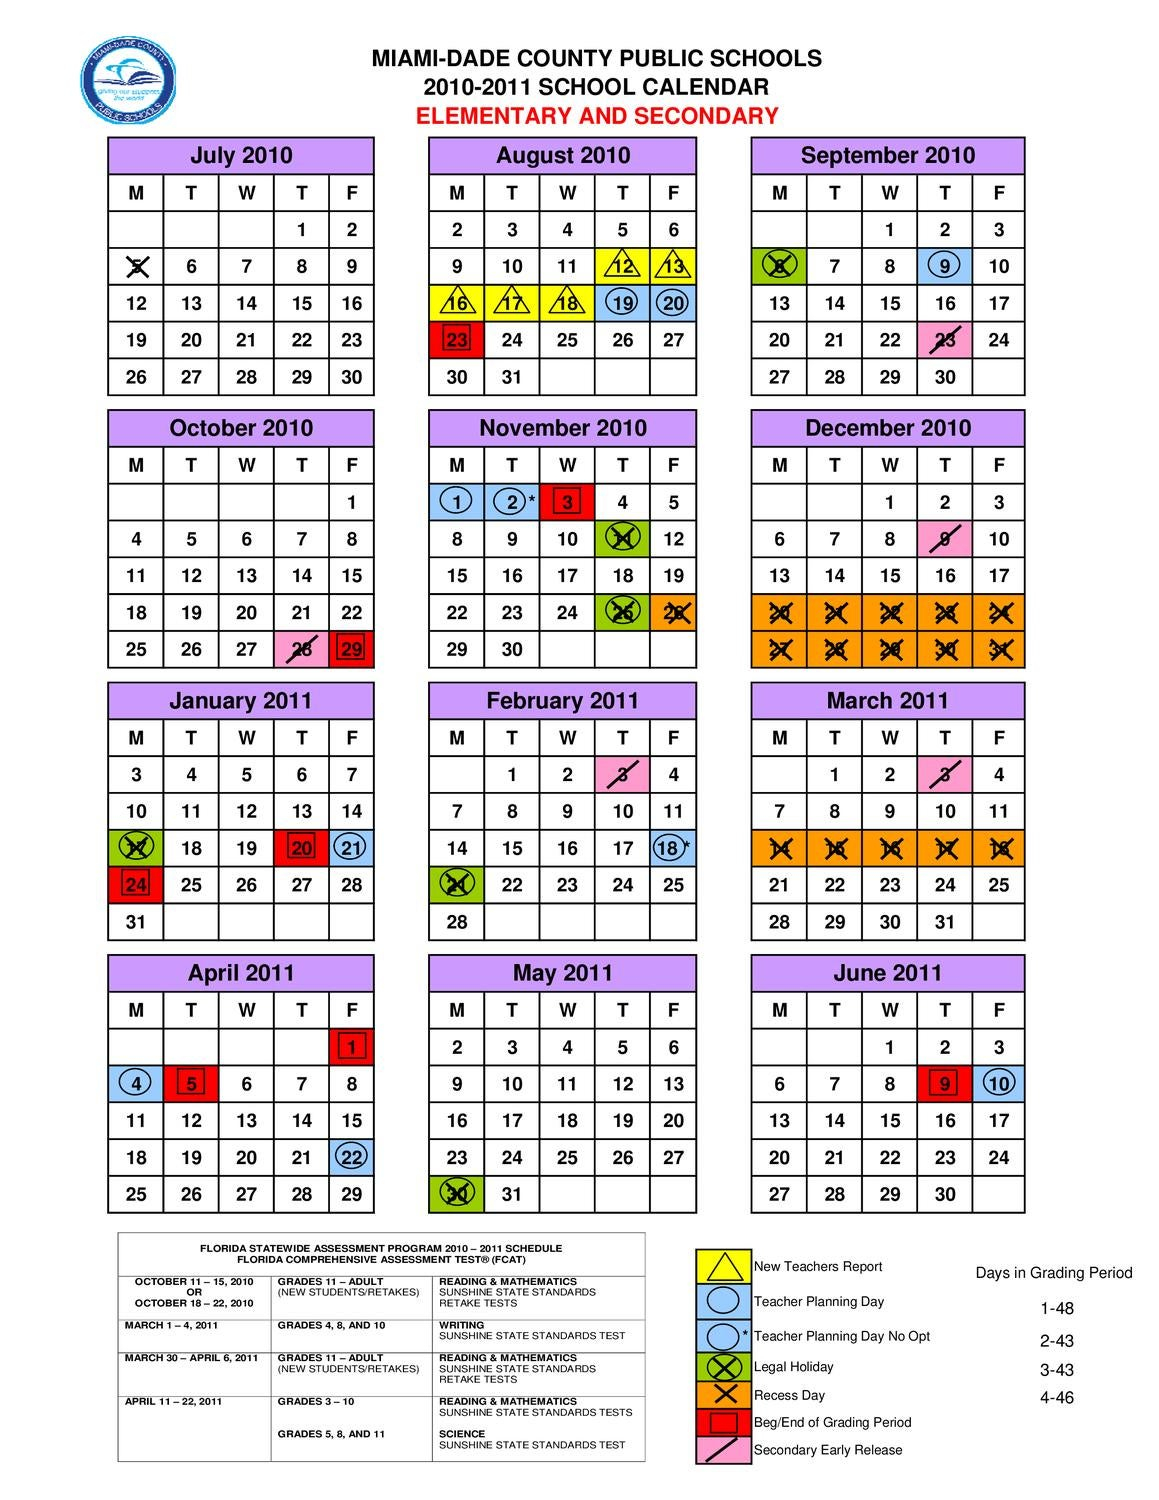 Miami Dade School Calendar By H Peters Issuu